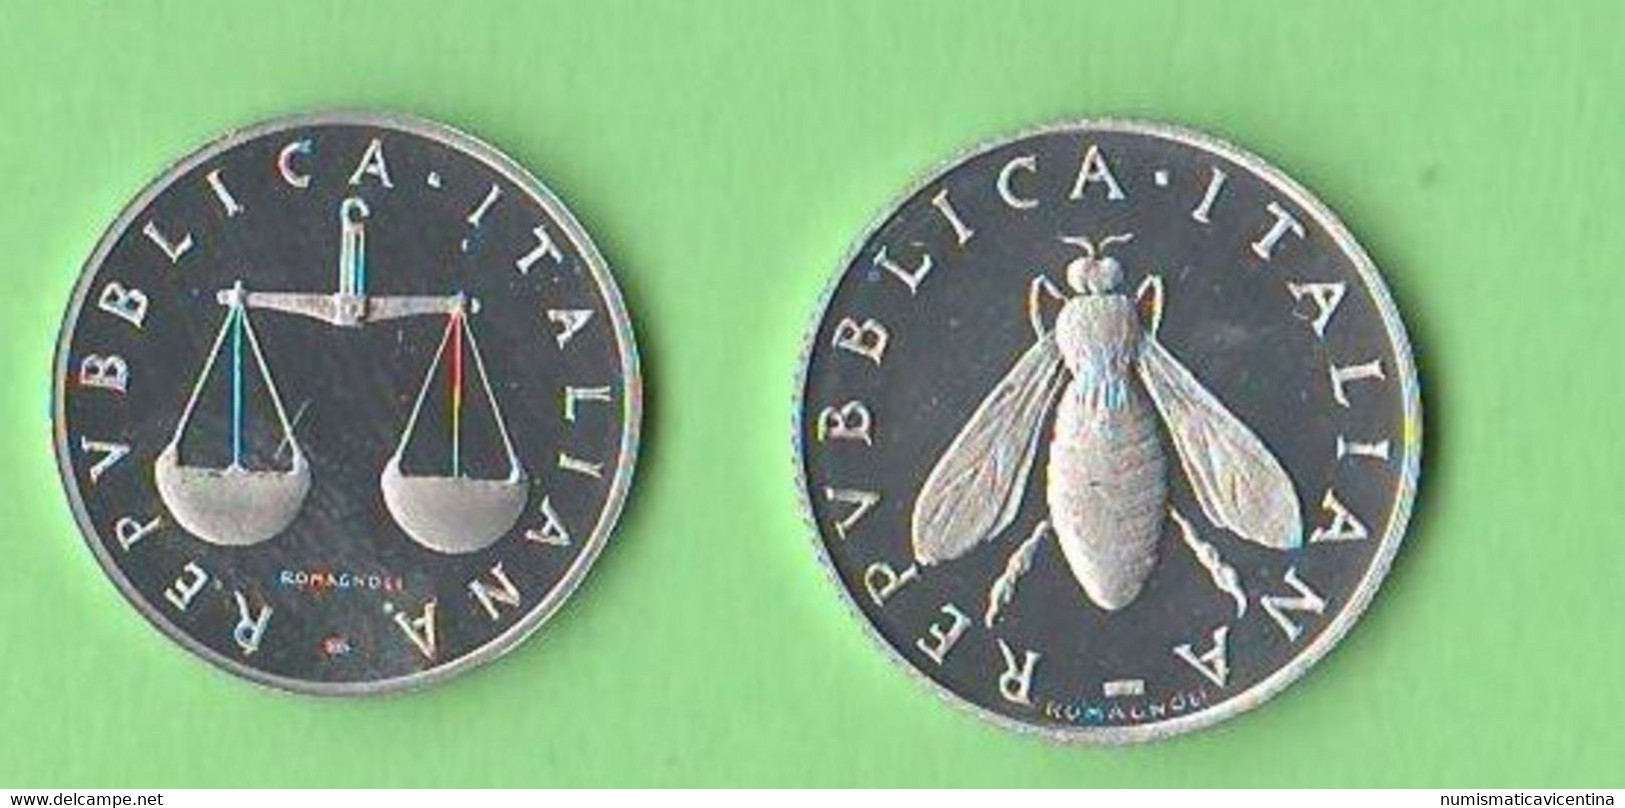 Italia 1 + 2 Lire 1988 Proof Coins Italie Italy - 1 Lire